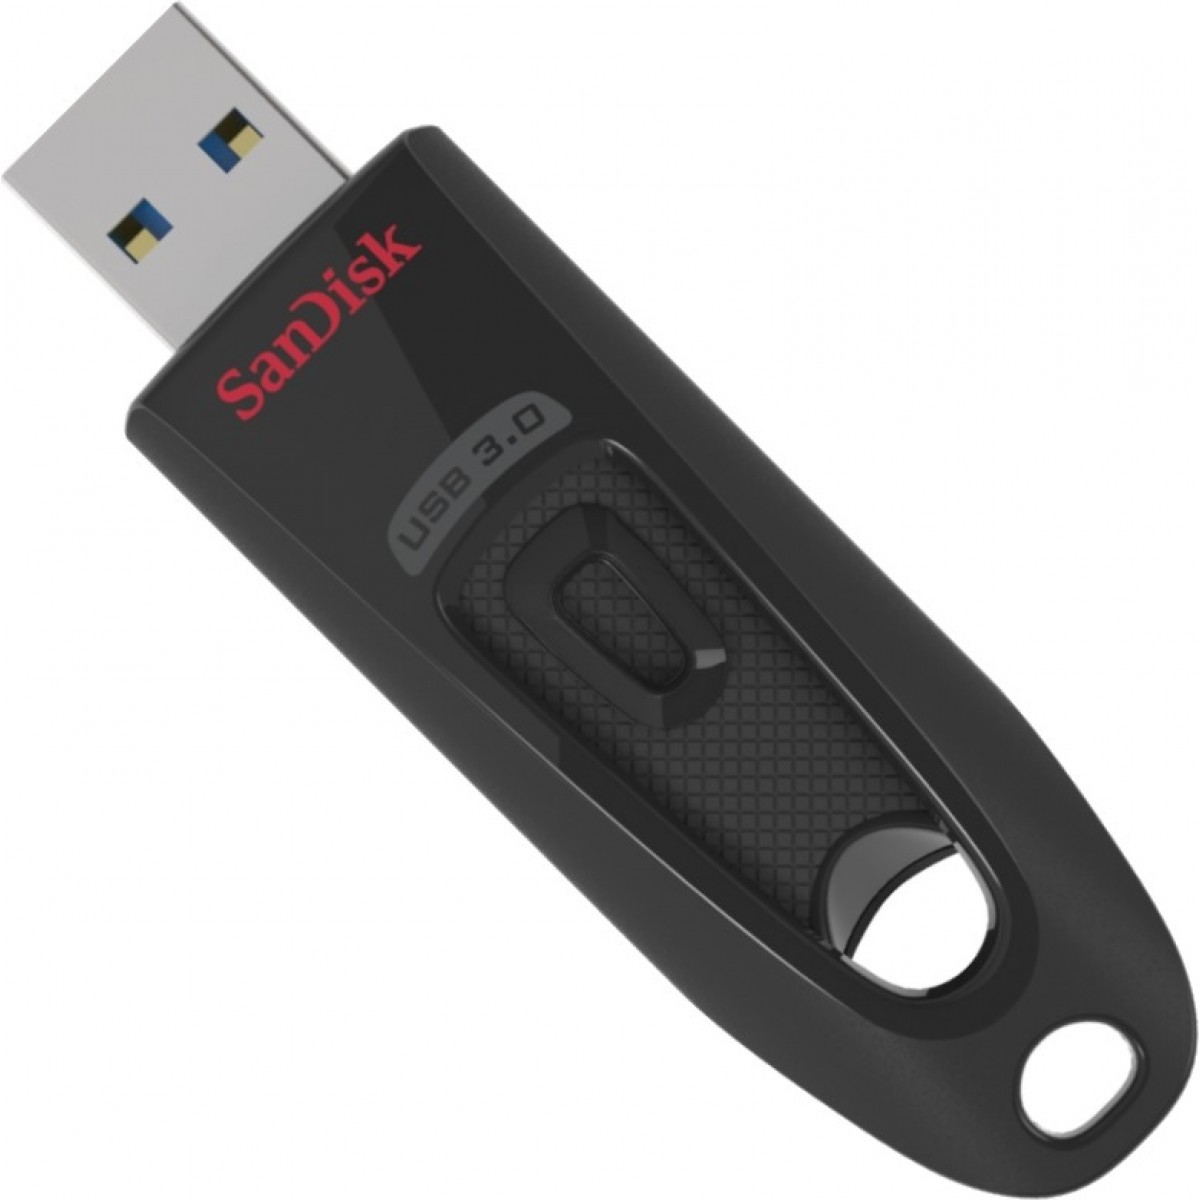 Купить флешку sandisk. SANDISK Ultra USB 3.0. SANDISK Ultra 64 GB USB 3.0. SANDISK флешка 64 ГБ. Флешка SANDISK 16gb.